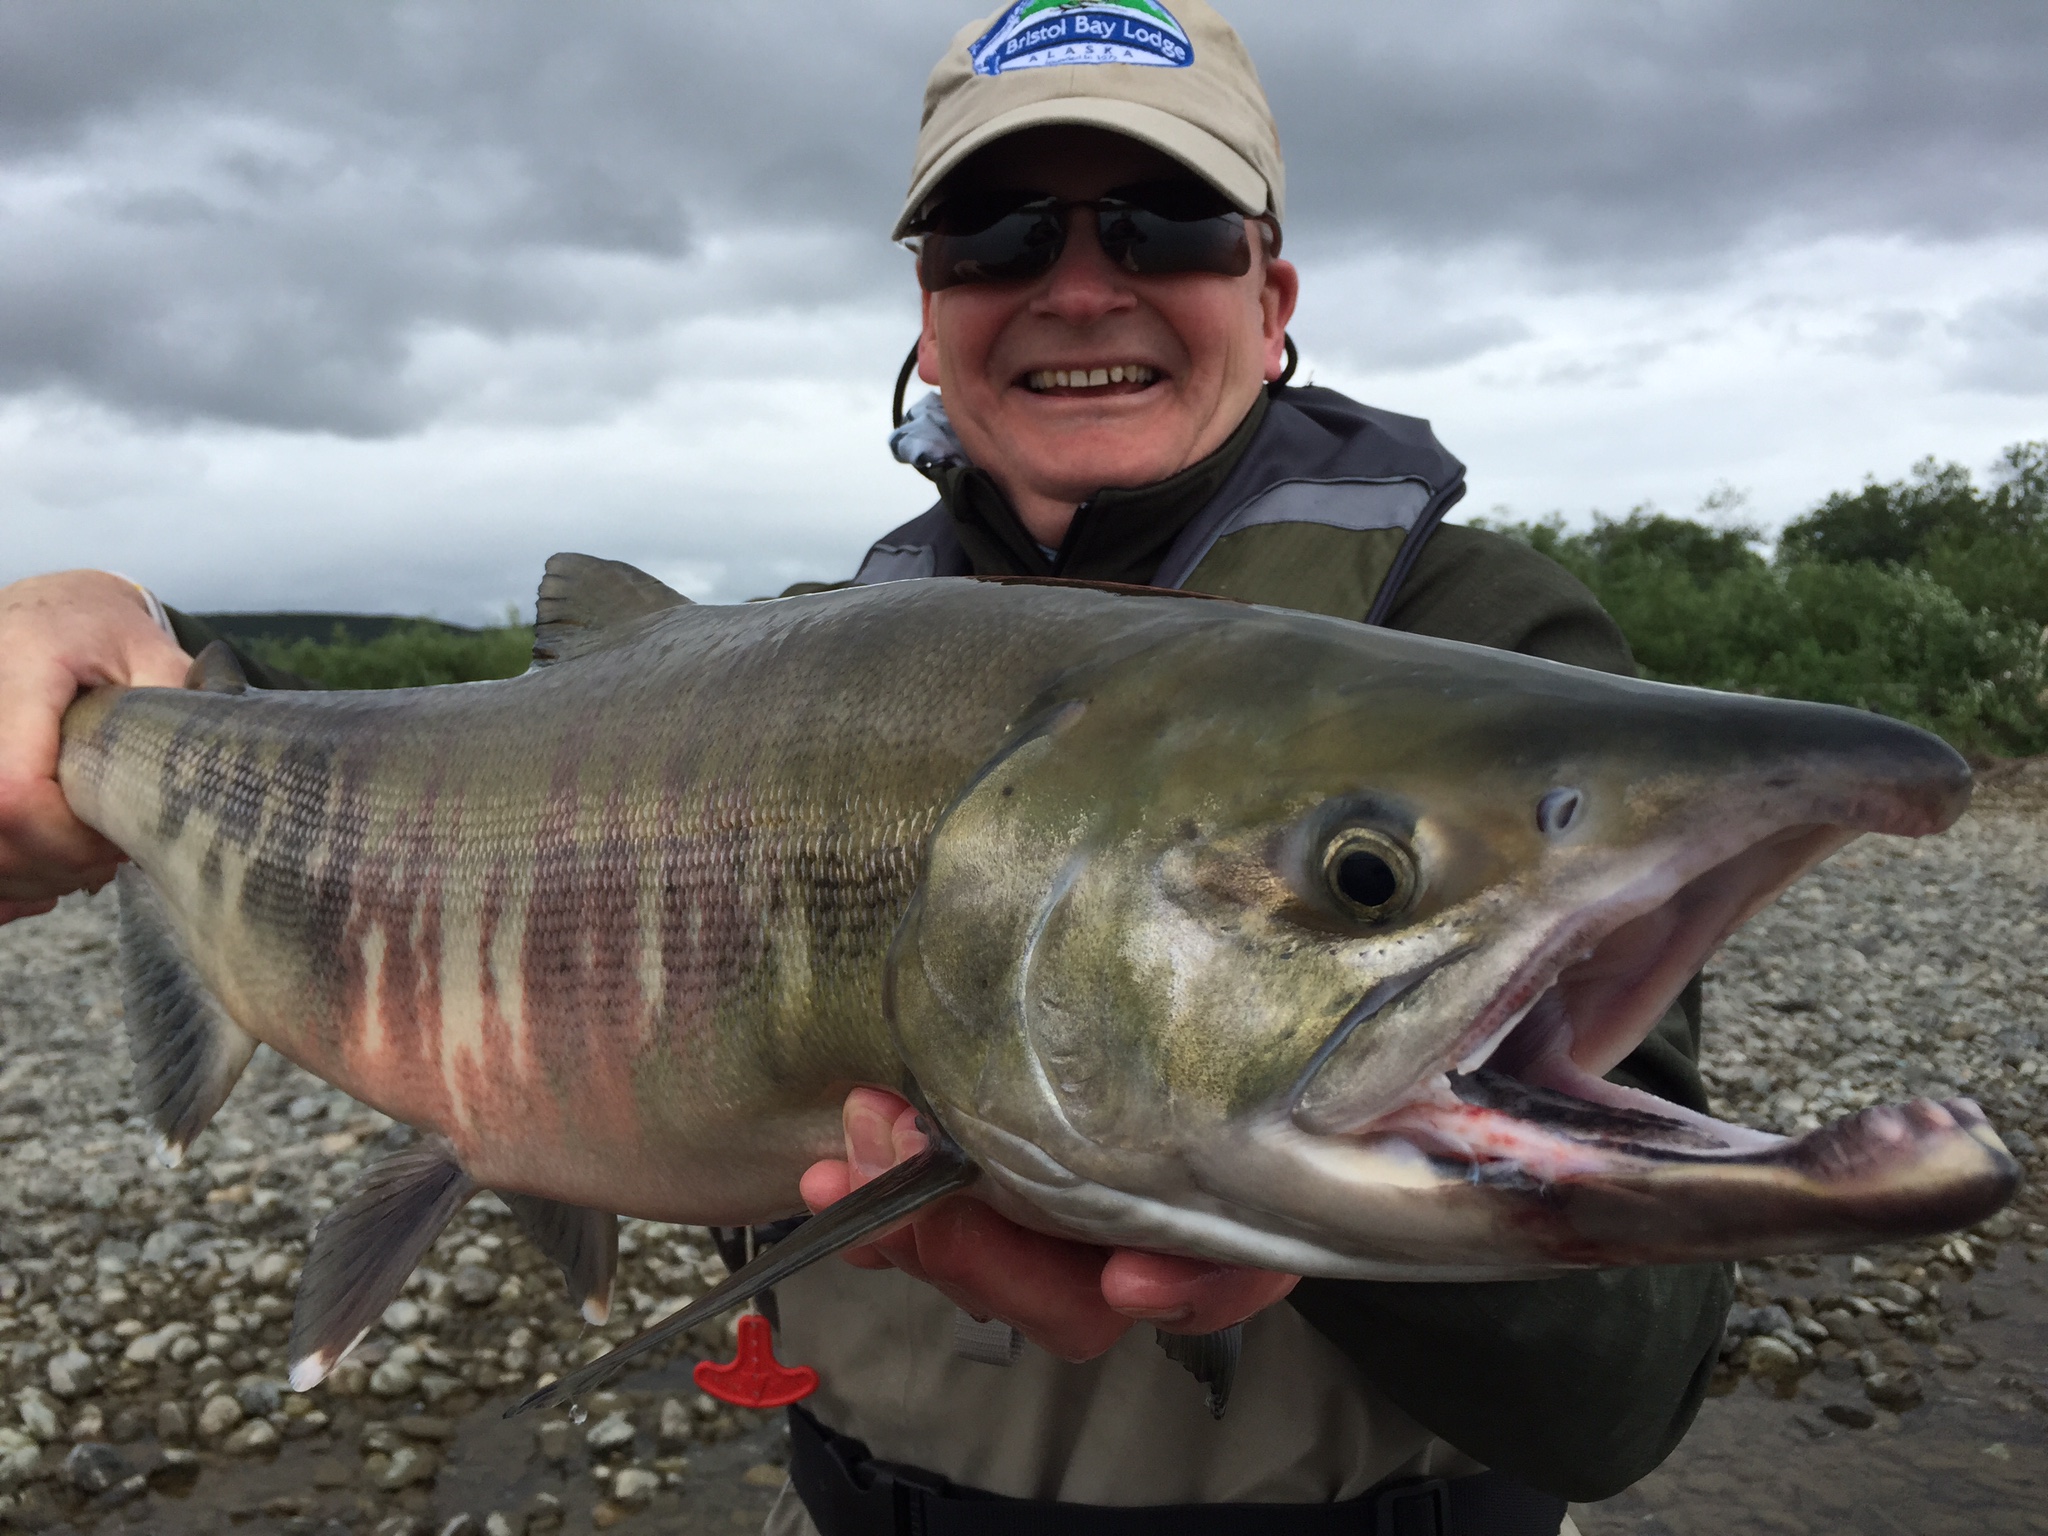 Cum Salmon fly fishing in Alaska with happy customer bristol bay lodge report